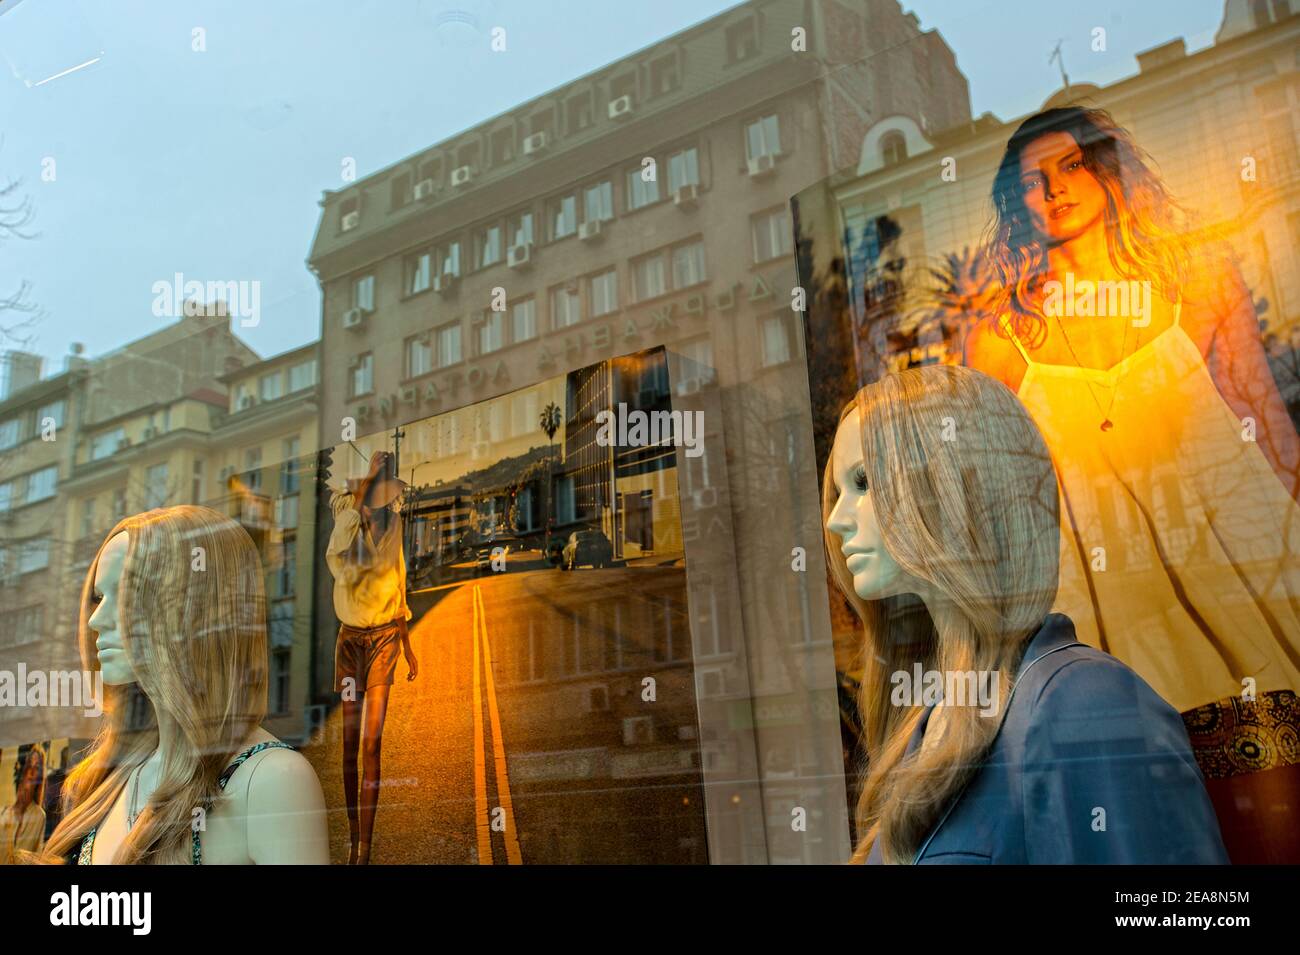 Fashion store window with street scene reflection, Sofia, Bulgaria Stock Photo